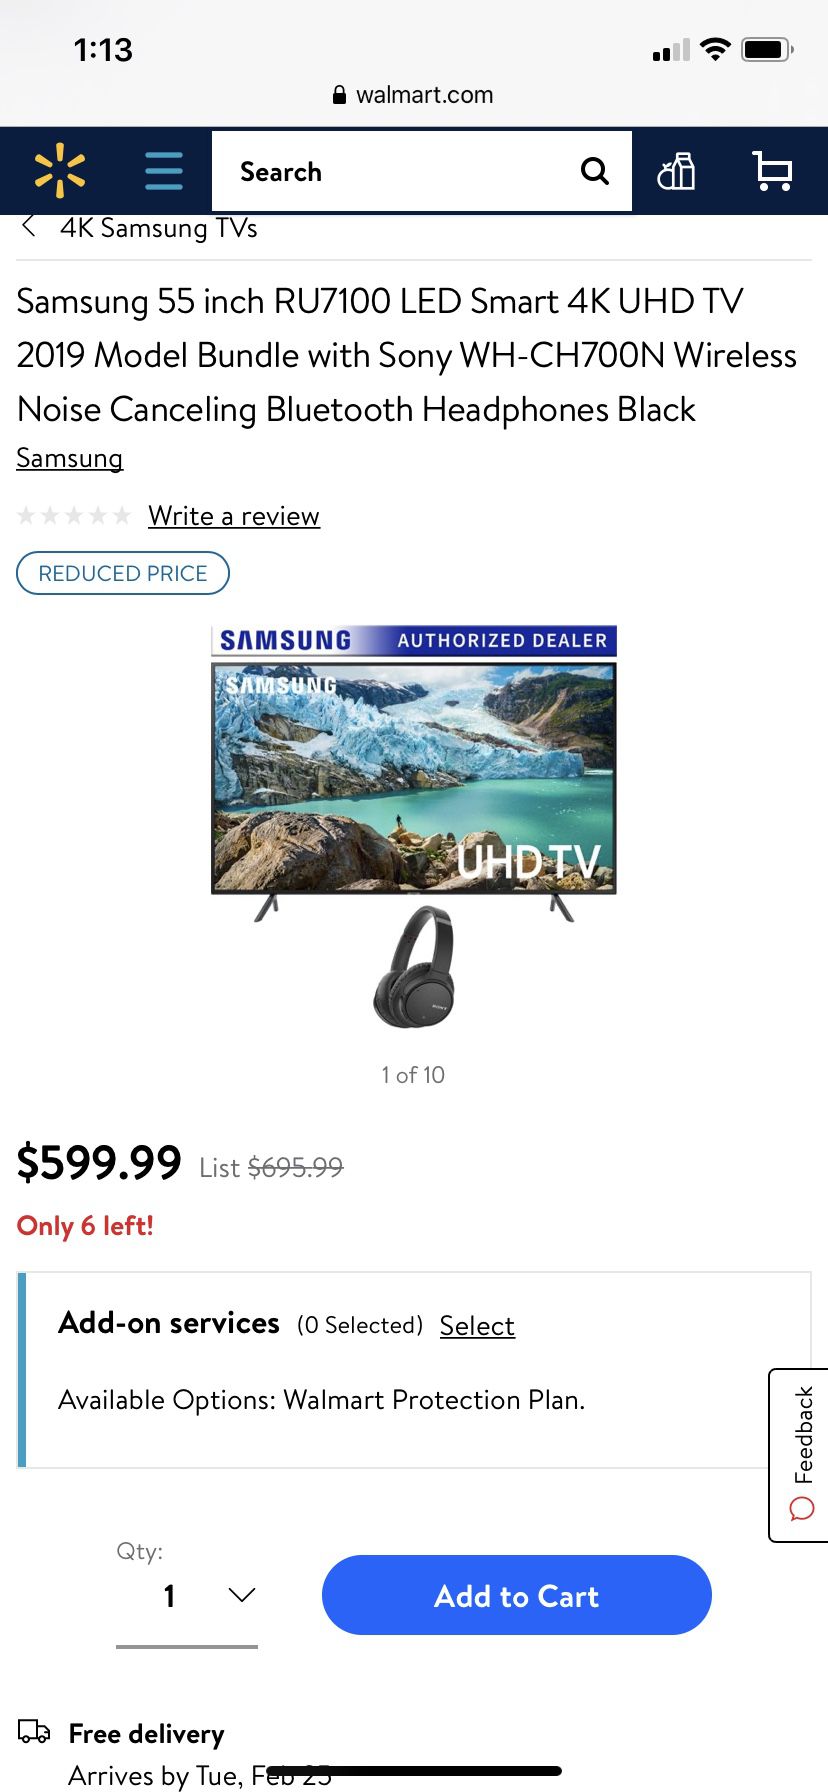 Samsung 55 inch RU7100 LED Smart 4K UHD TV 2019 Model